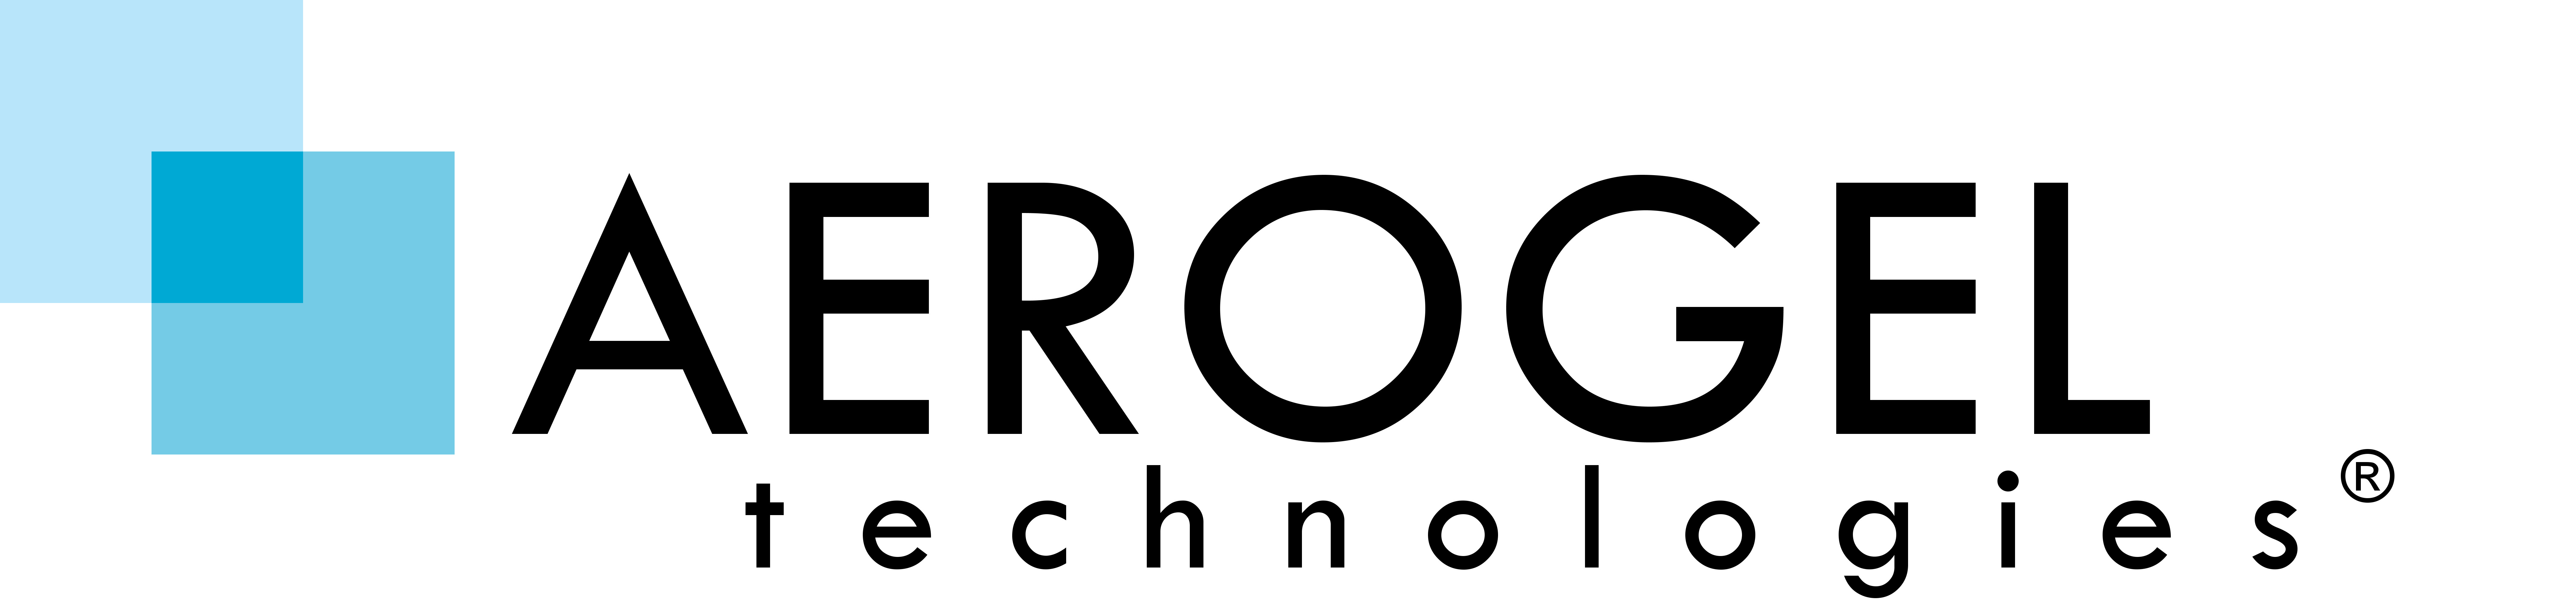 Aerogel Technologies